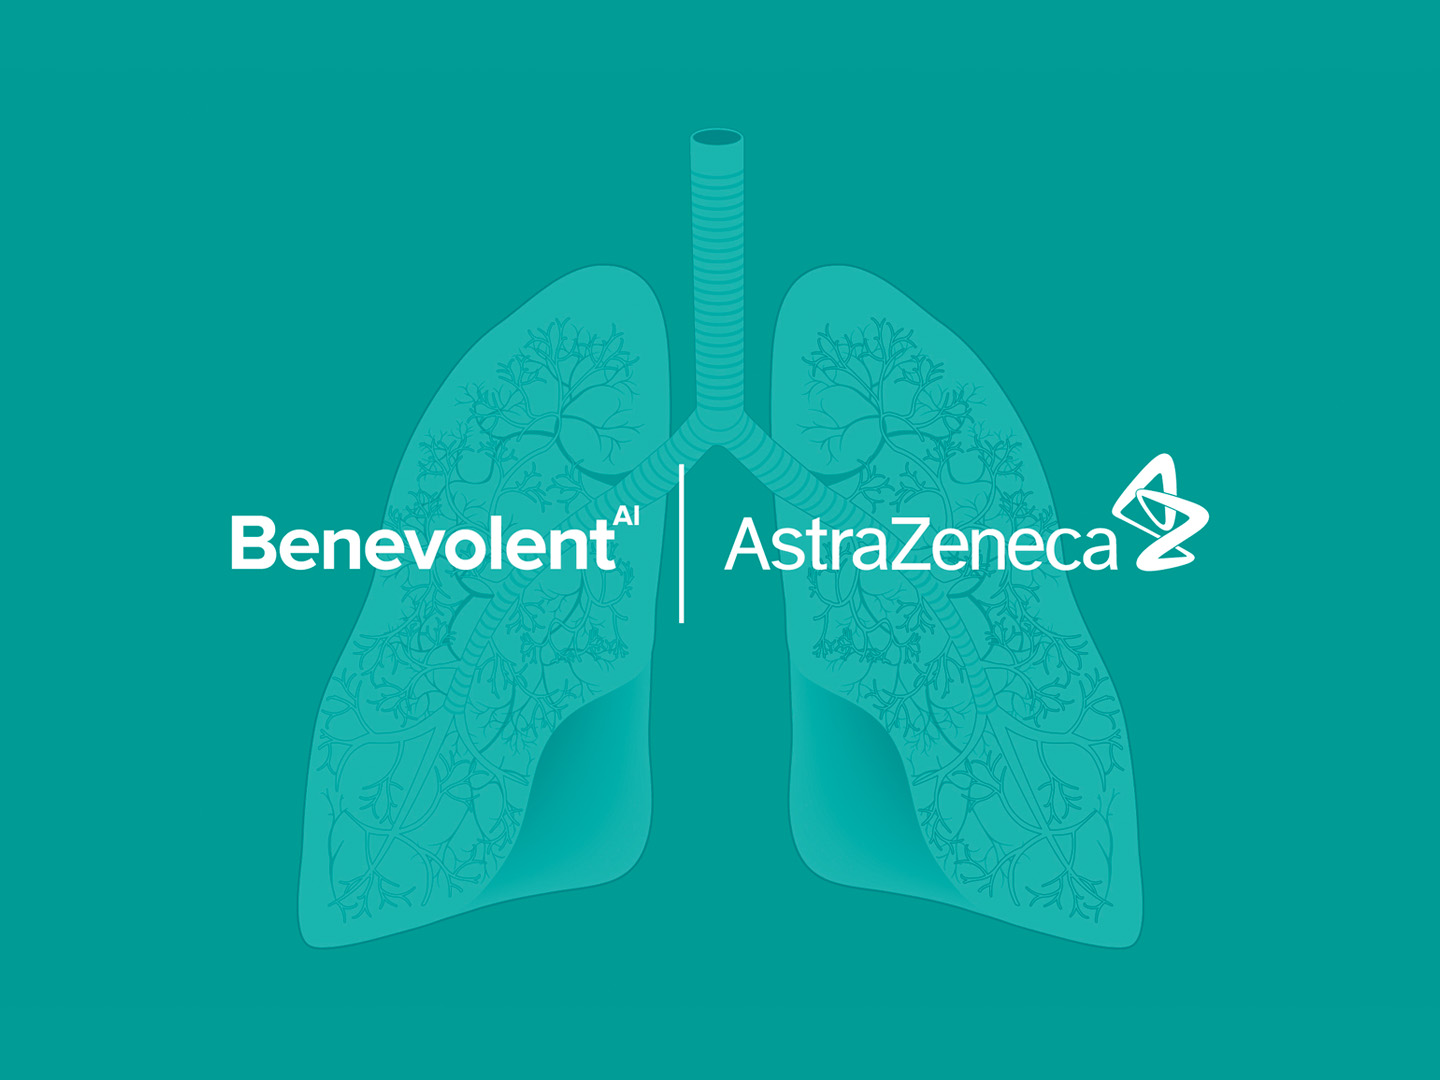 BenevolentAI_achieves_second_major_collaboration_milestone_with_novel_idiopathic_pulmonary_fibrosis_target_selected_for_AstraZenecas_portfolio.jpg